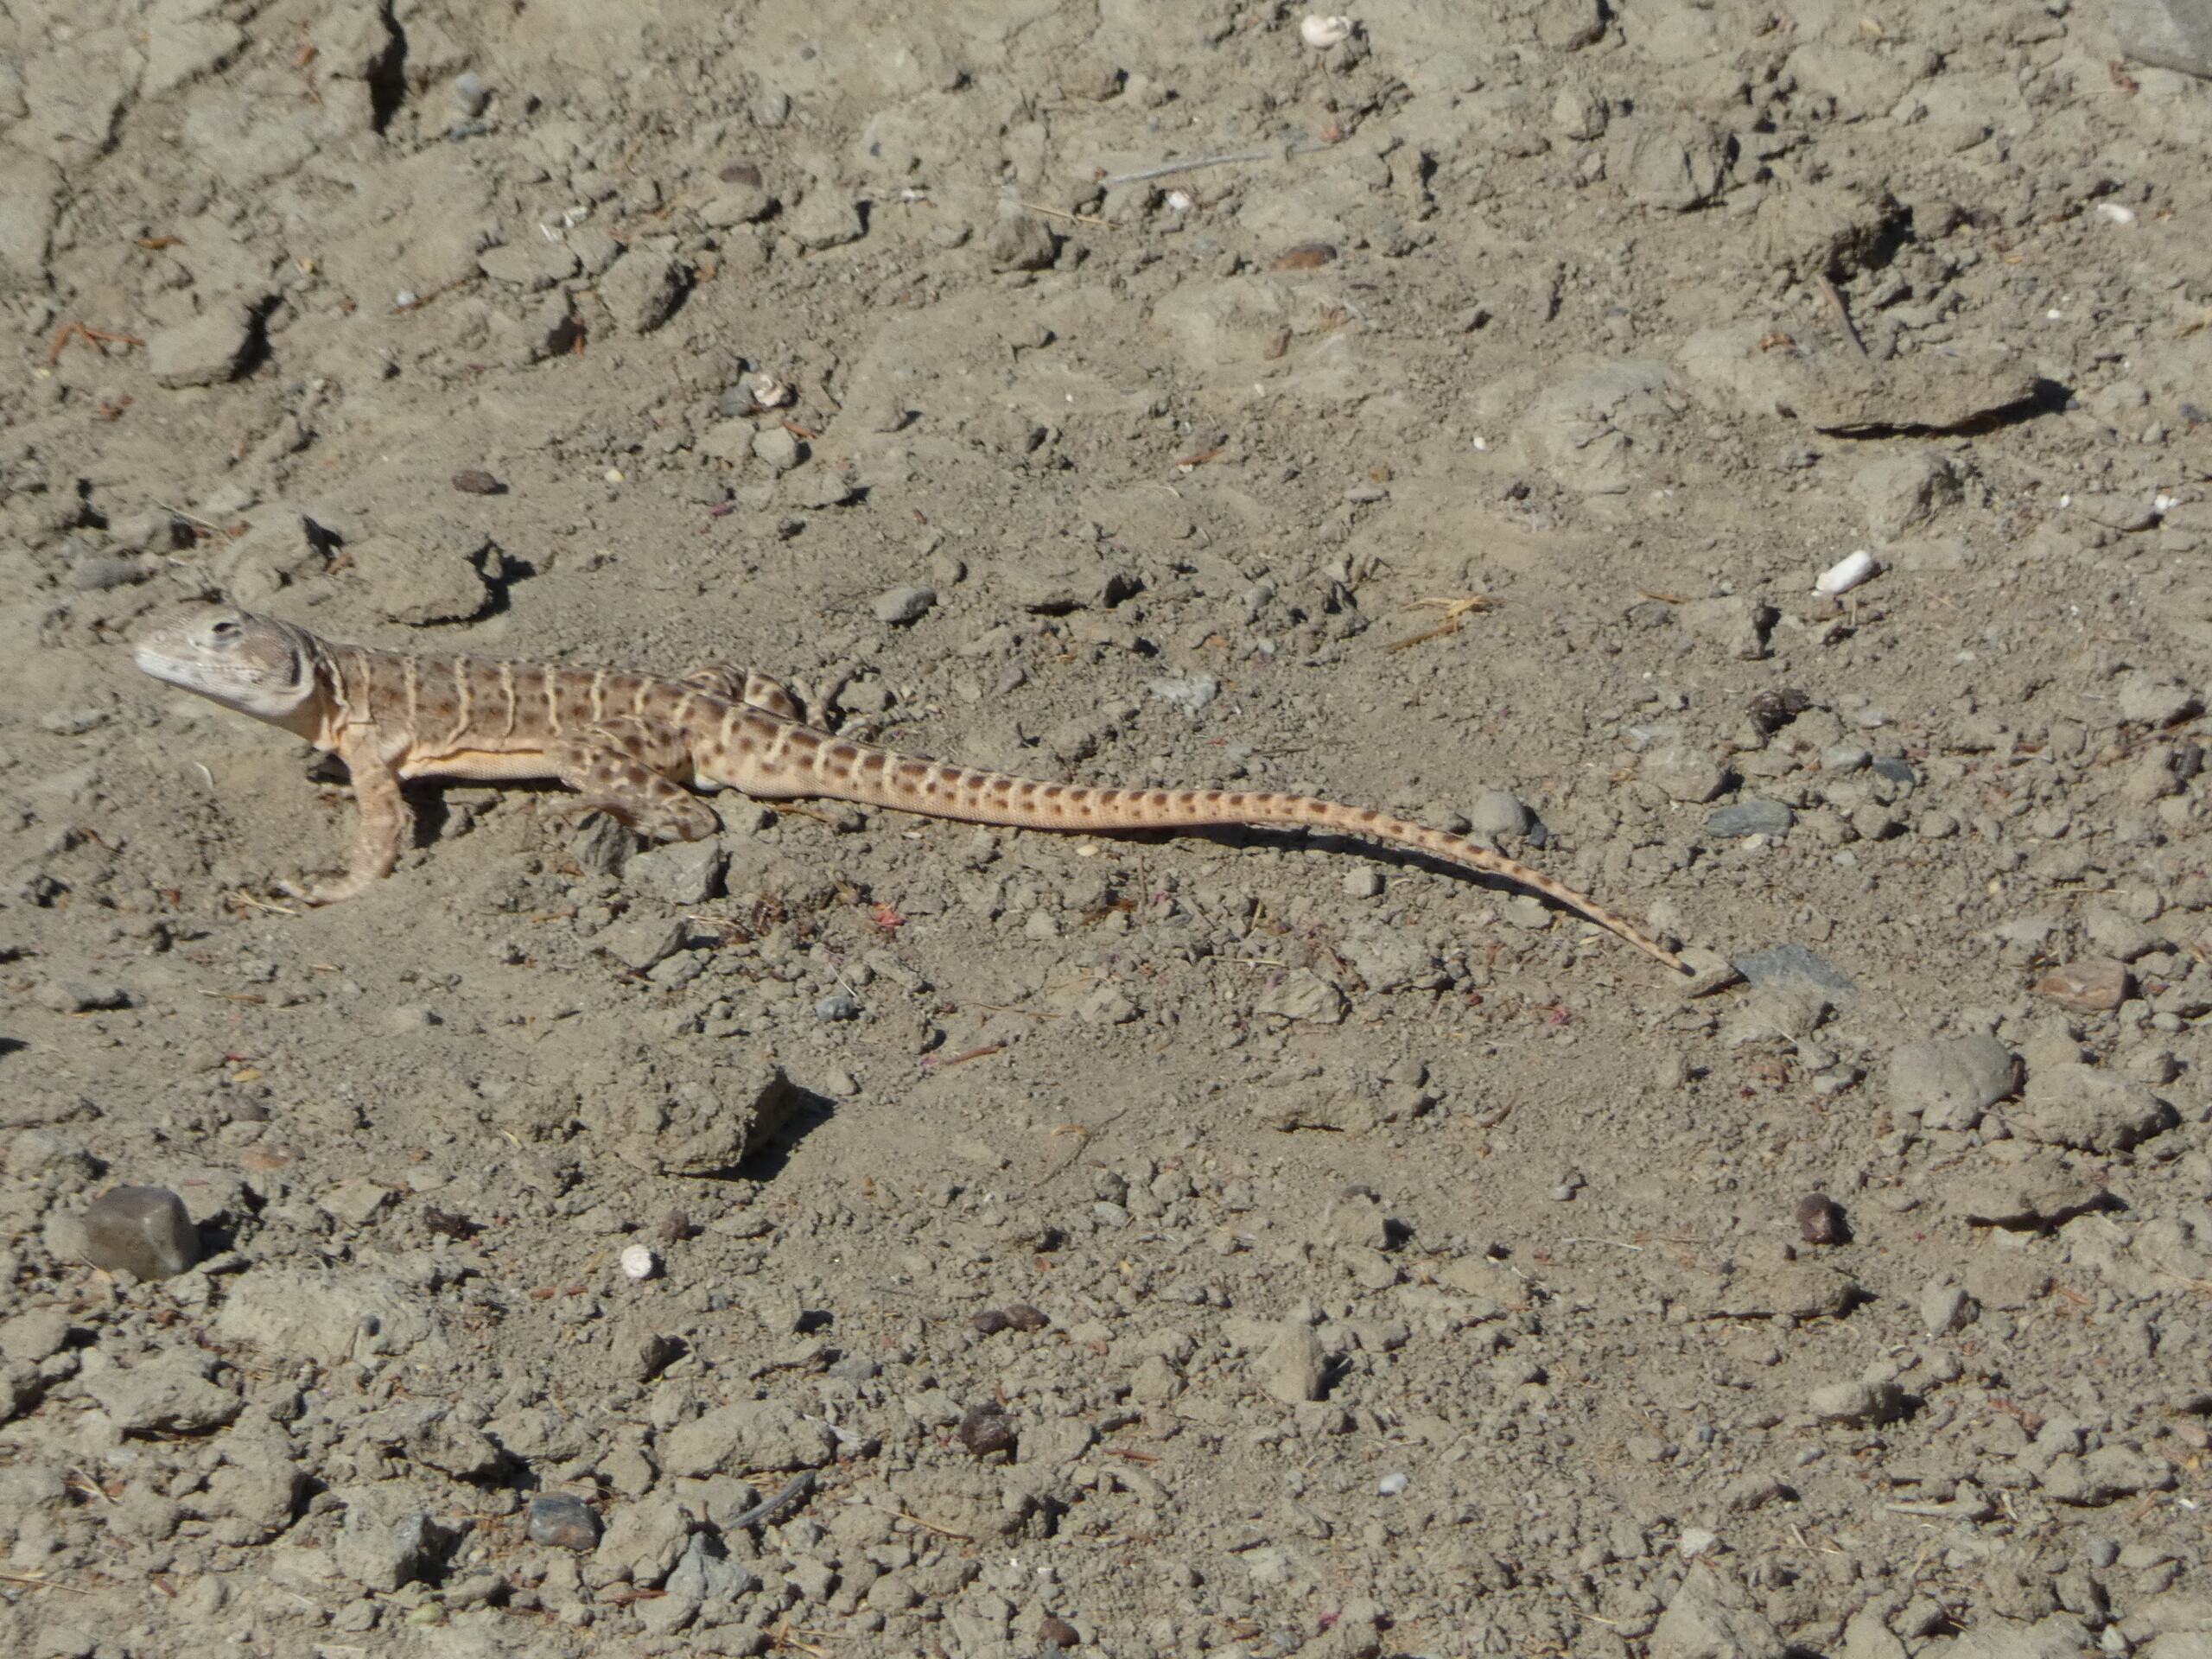 A blunt-nosed lizard basking in the sun